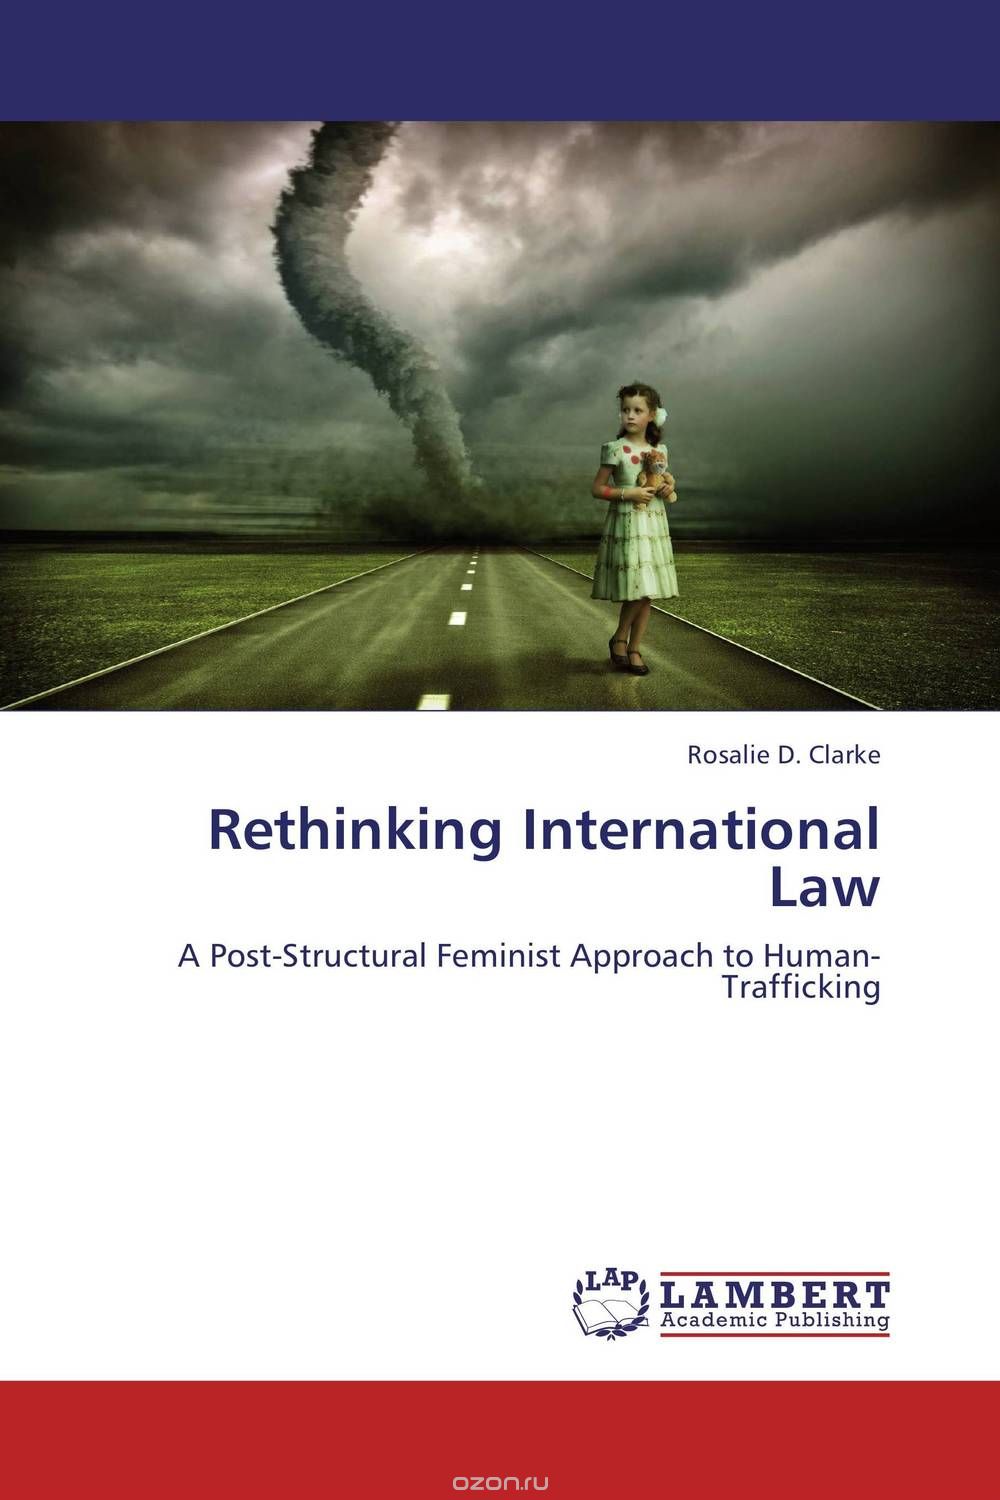 Скачать книгу "Rethinking International Law"